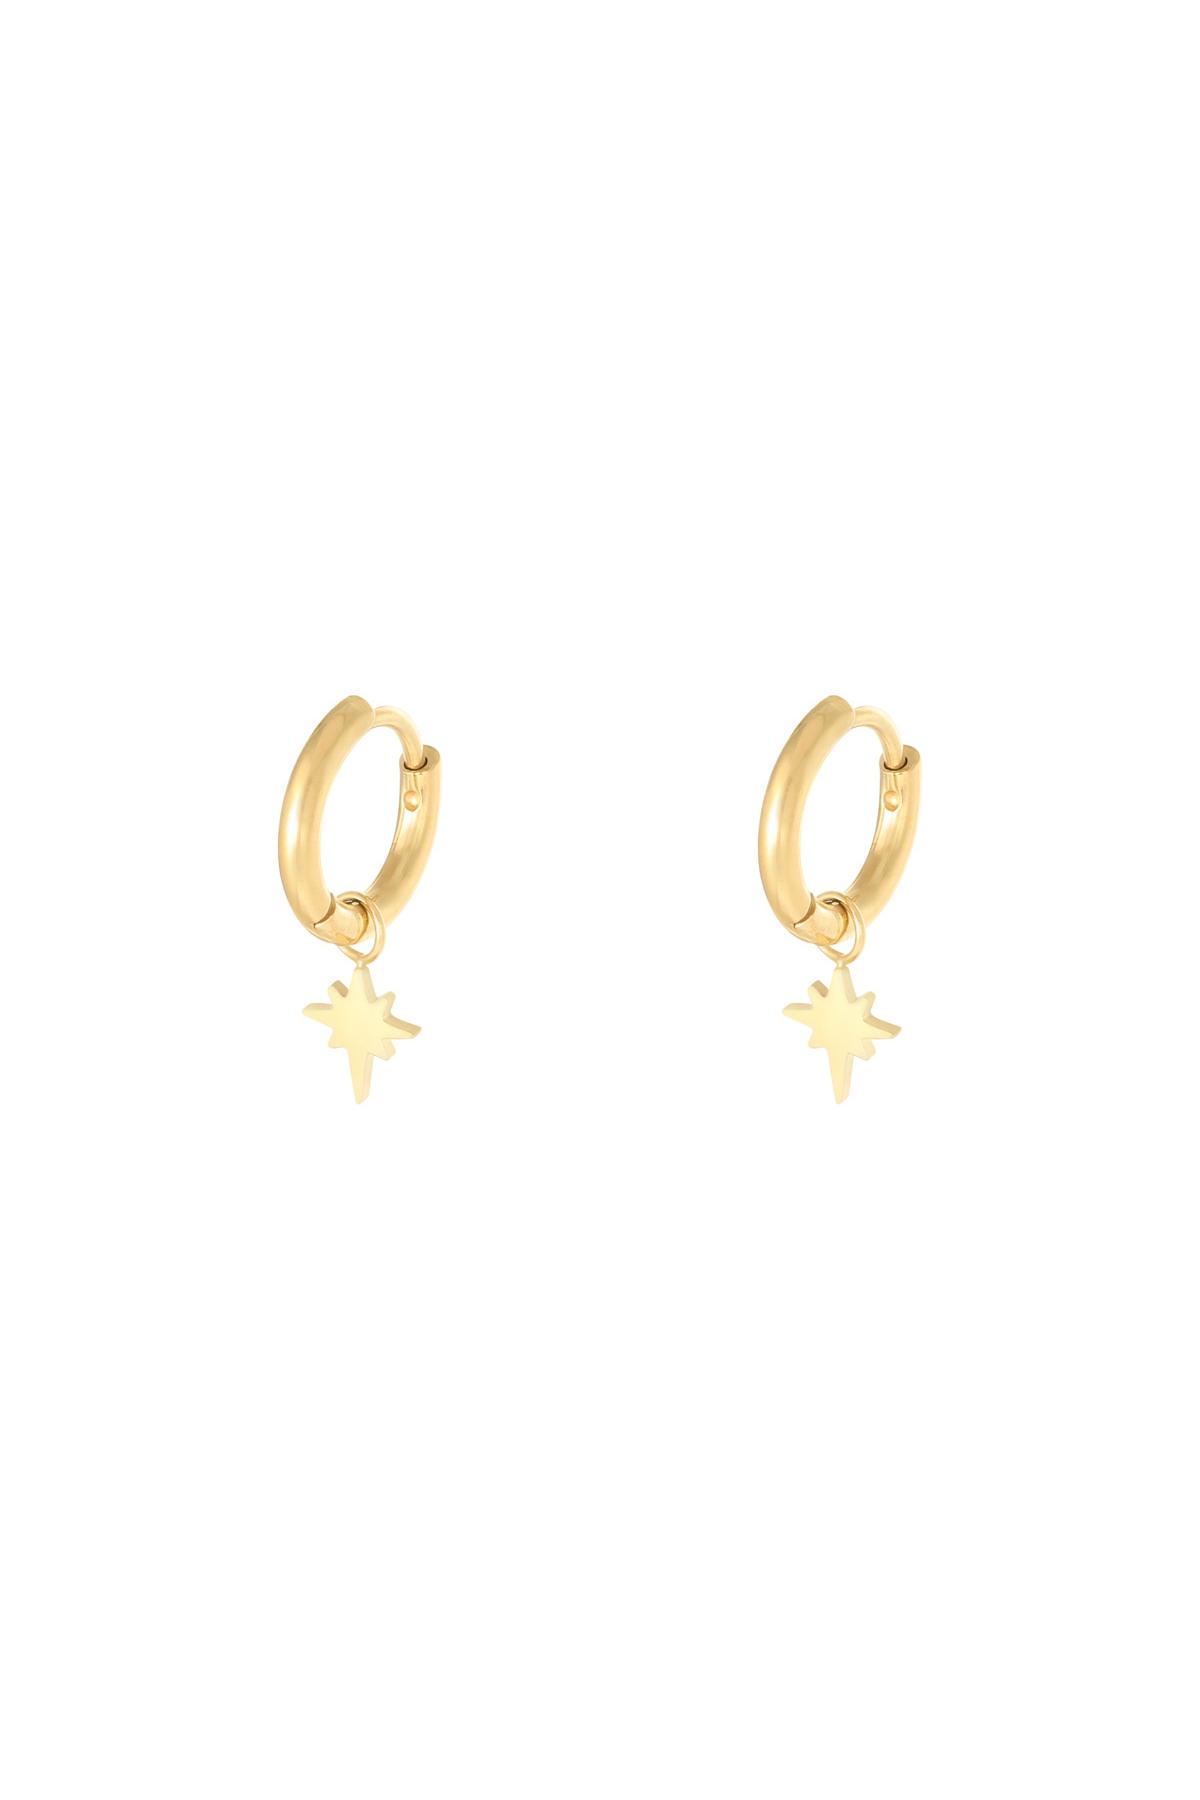 Gold / Earrings Spark Gold Stainless Steel 